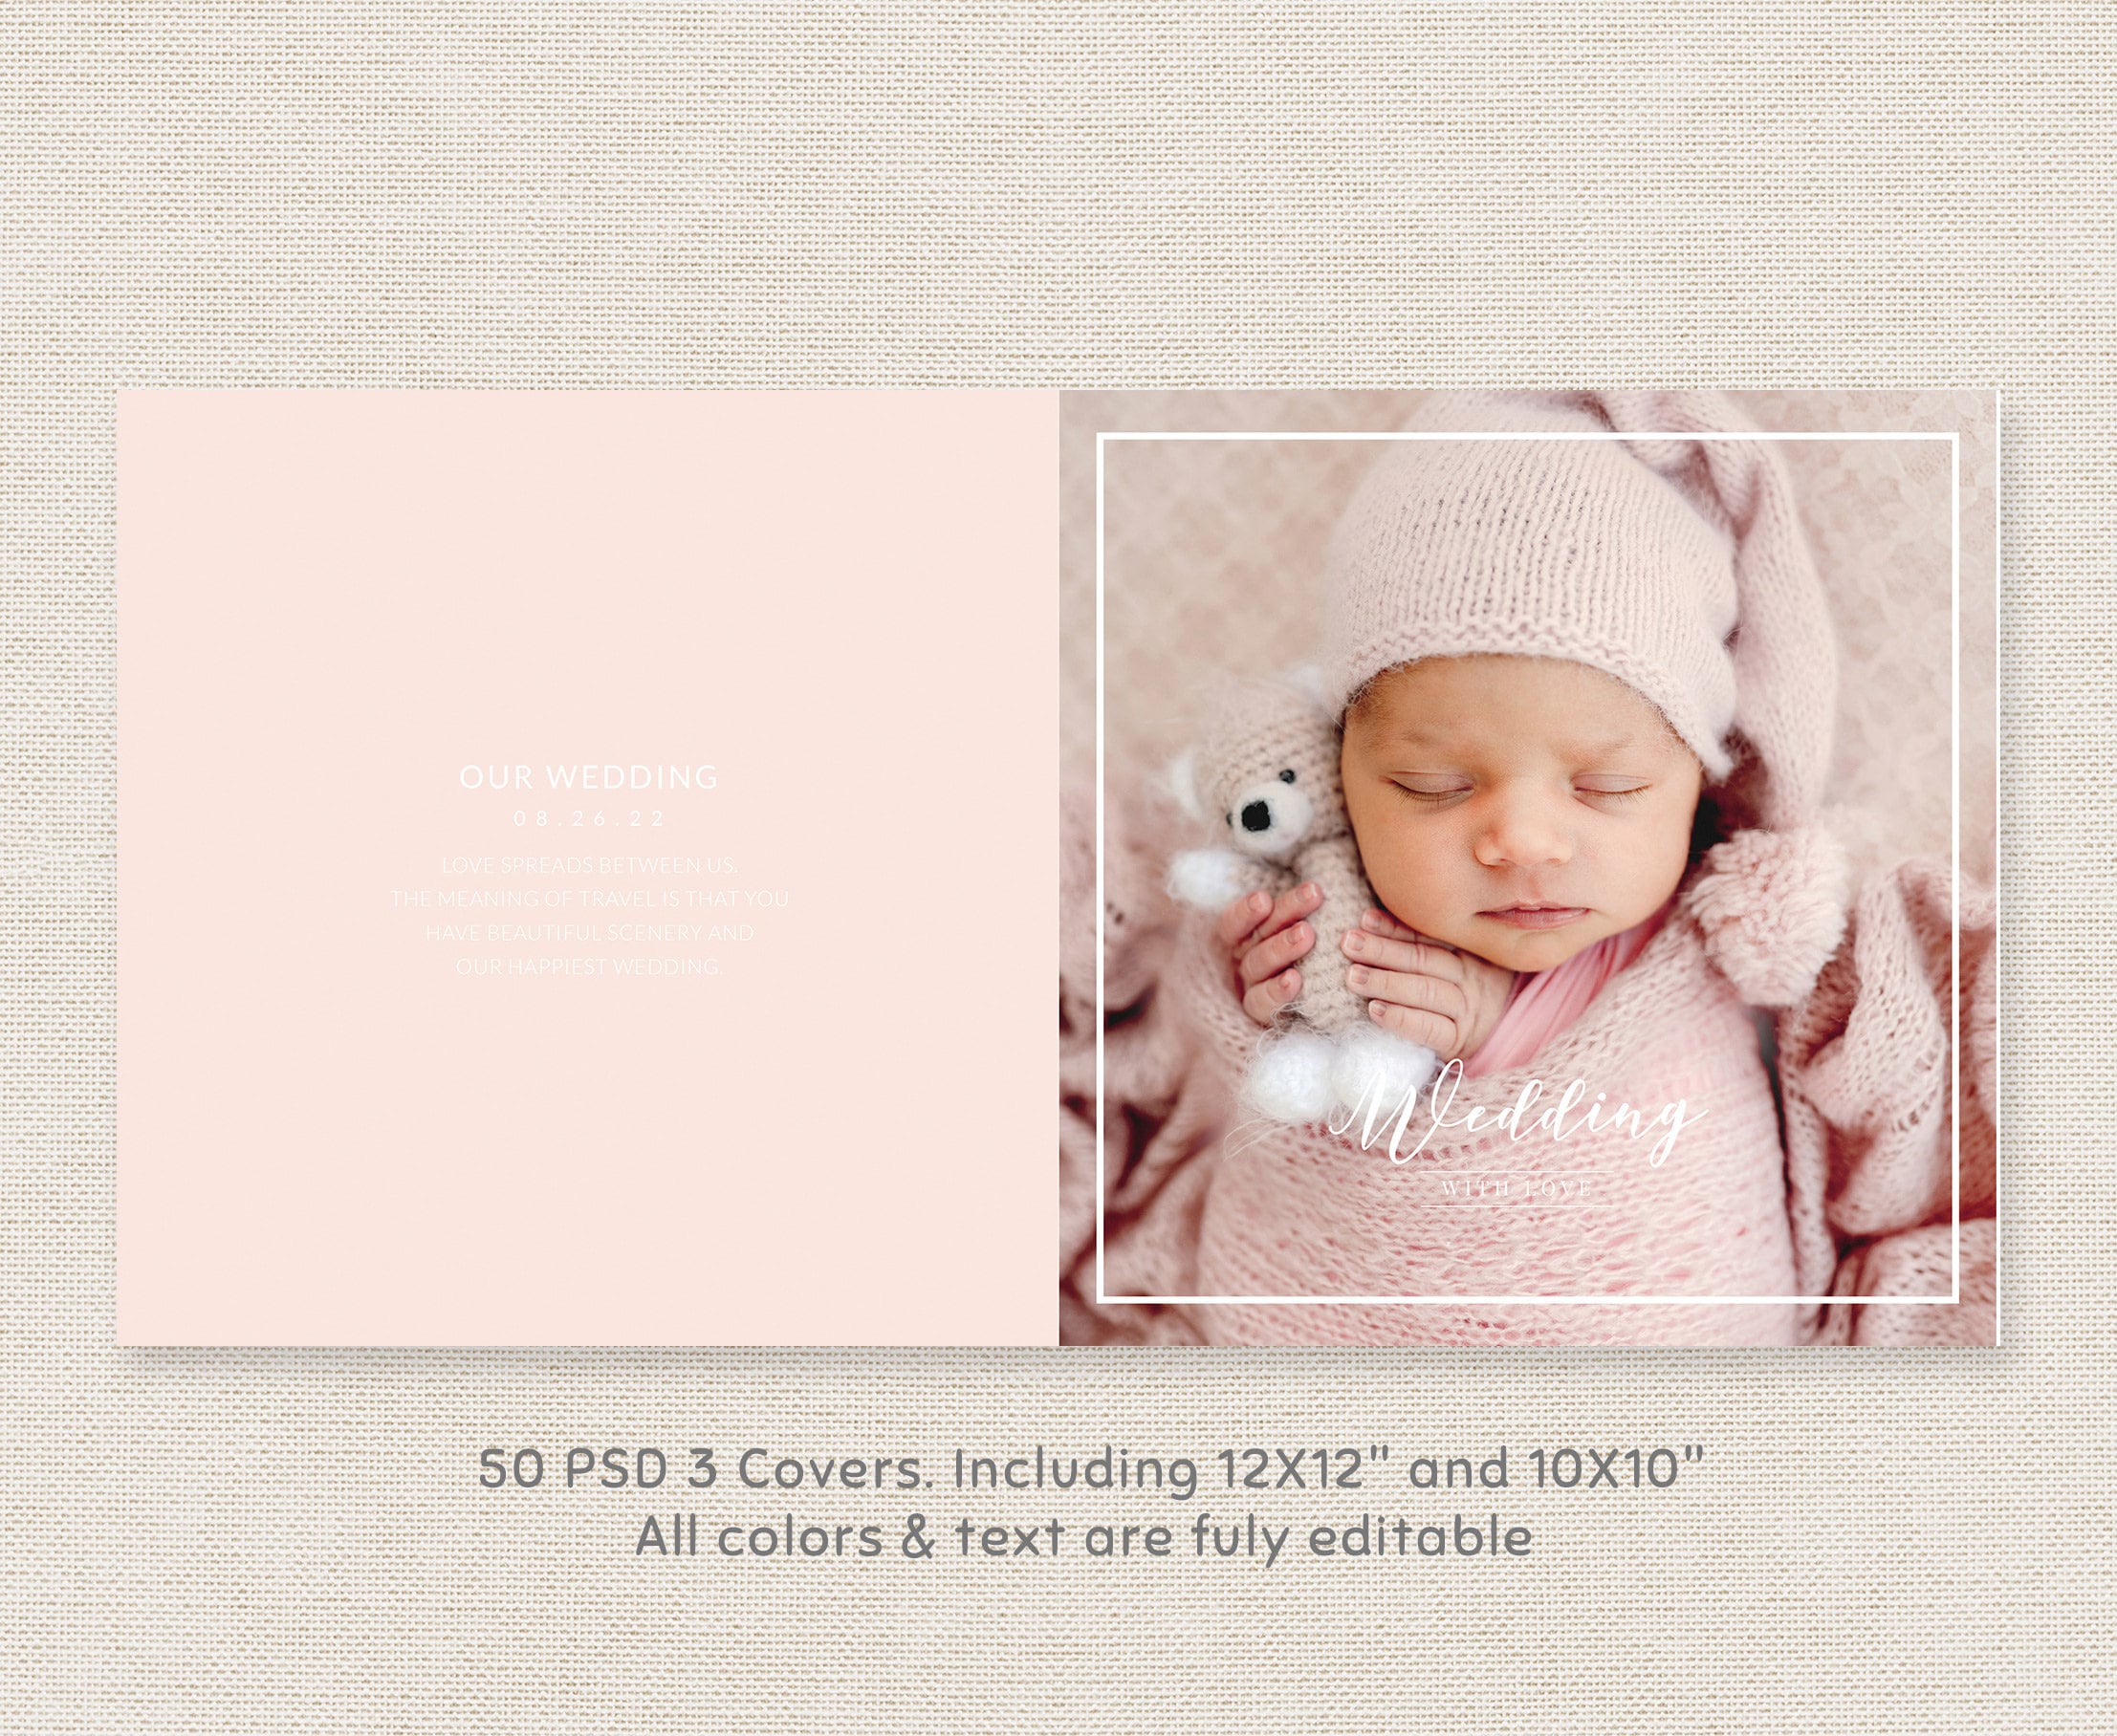 Baby Photo Book Template, Photo Album Template, Editable Photo Book,  Customizable Baby Photo Album, Baby Book, Newborn Album, Baby Photobook 